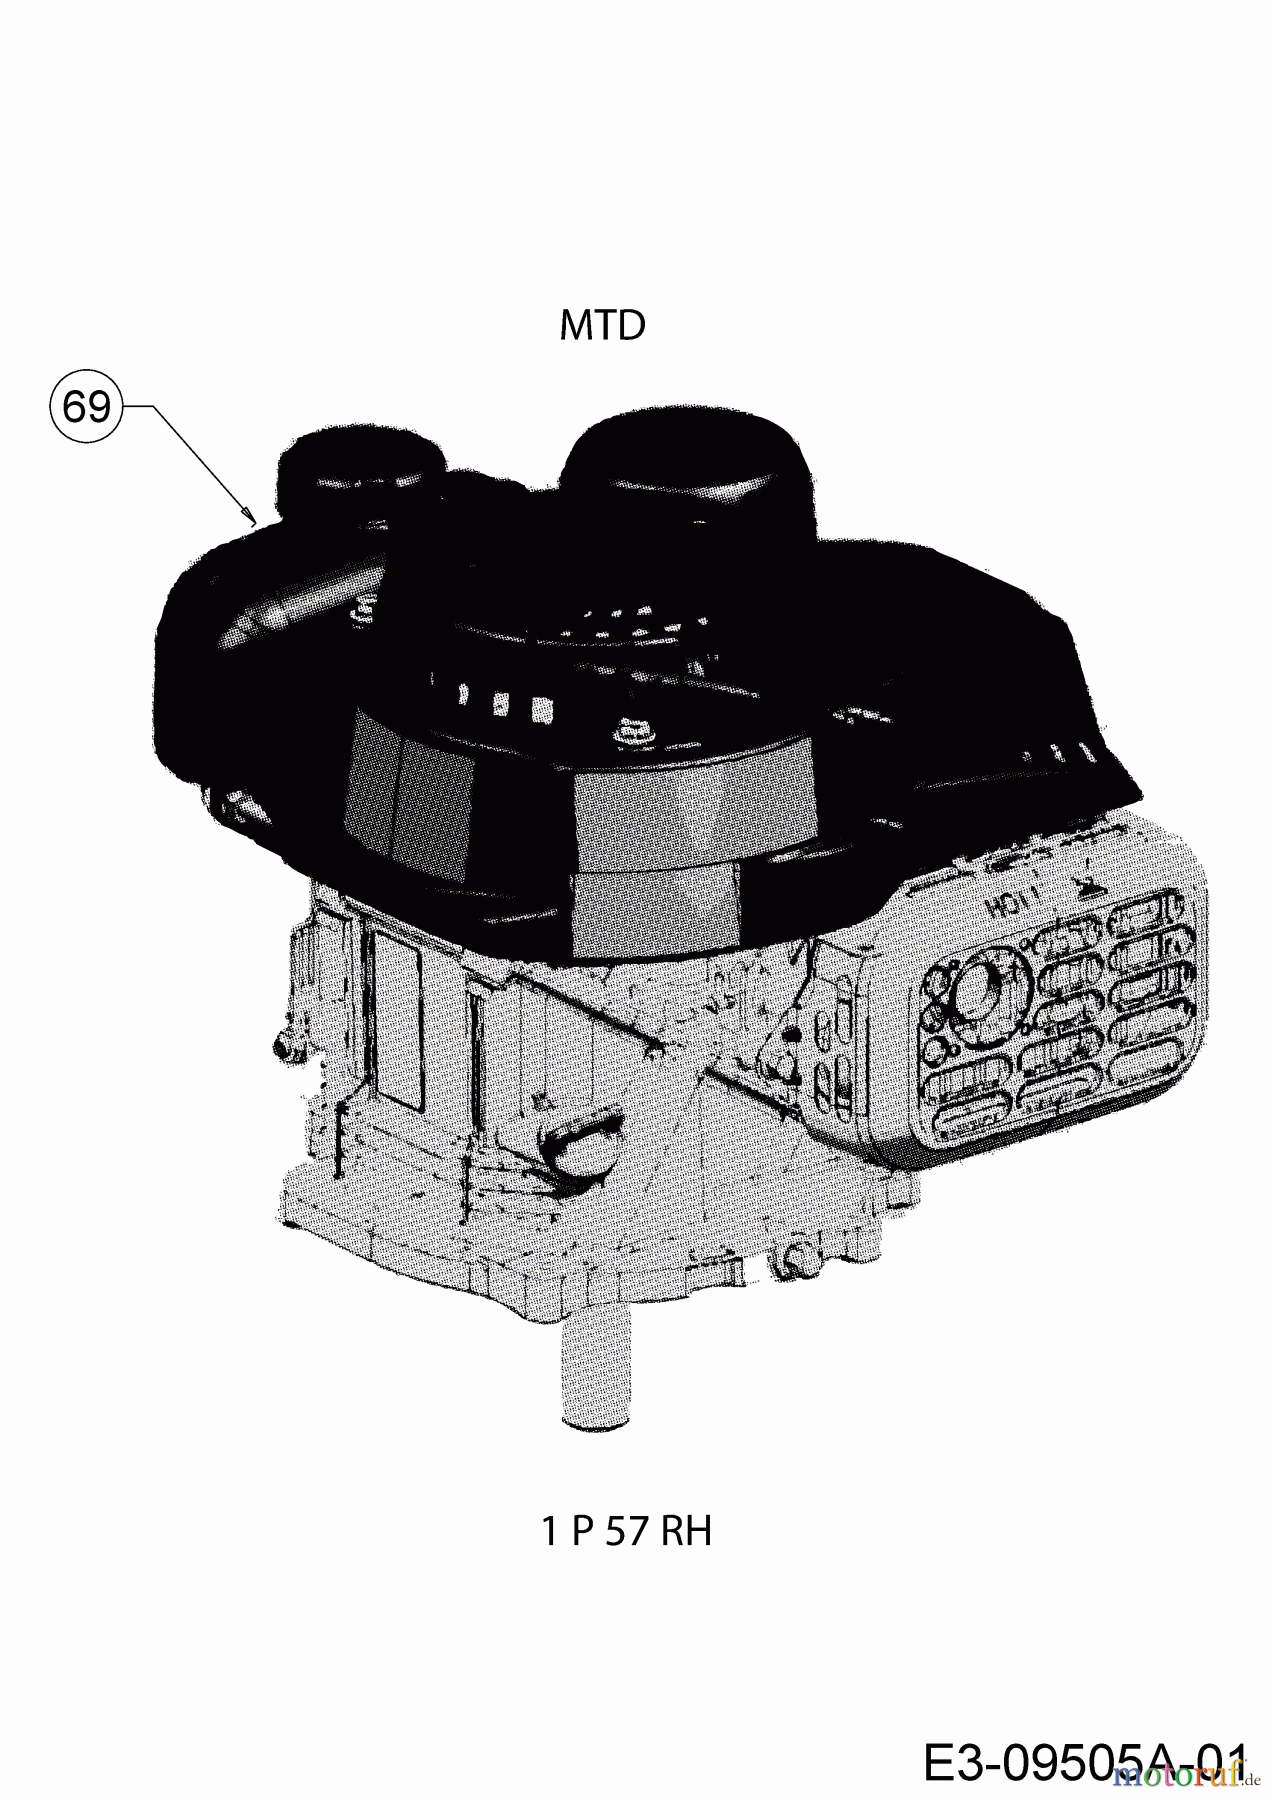  Cub Cadet Motormäher mit Antrieb LM 1 AR 42 12A-LQSJ603  (2017) Motor MTD